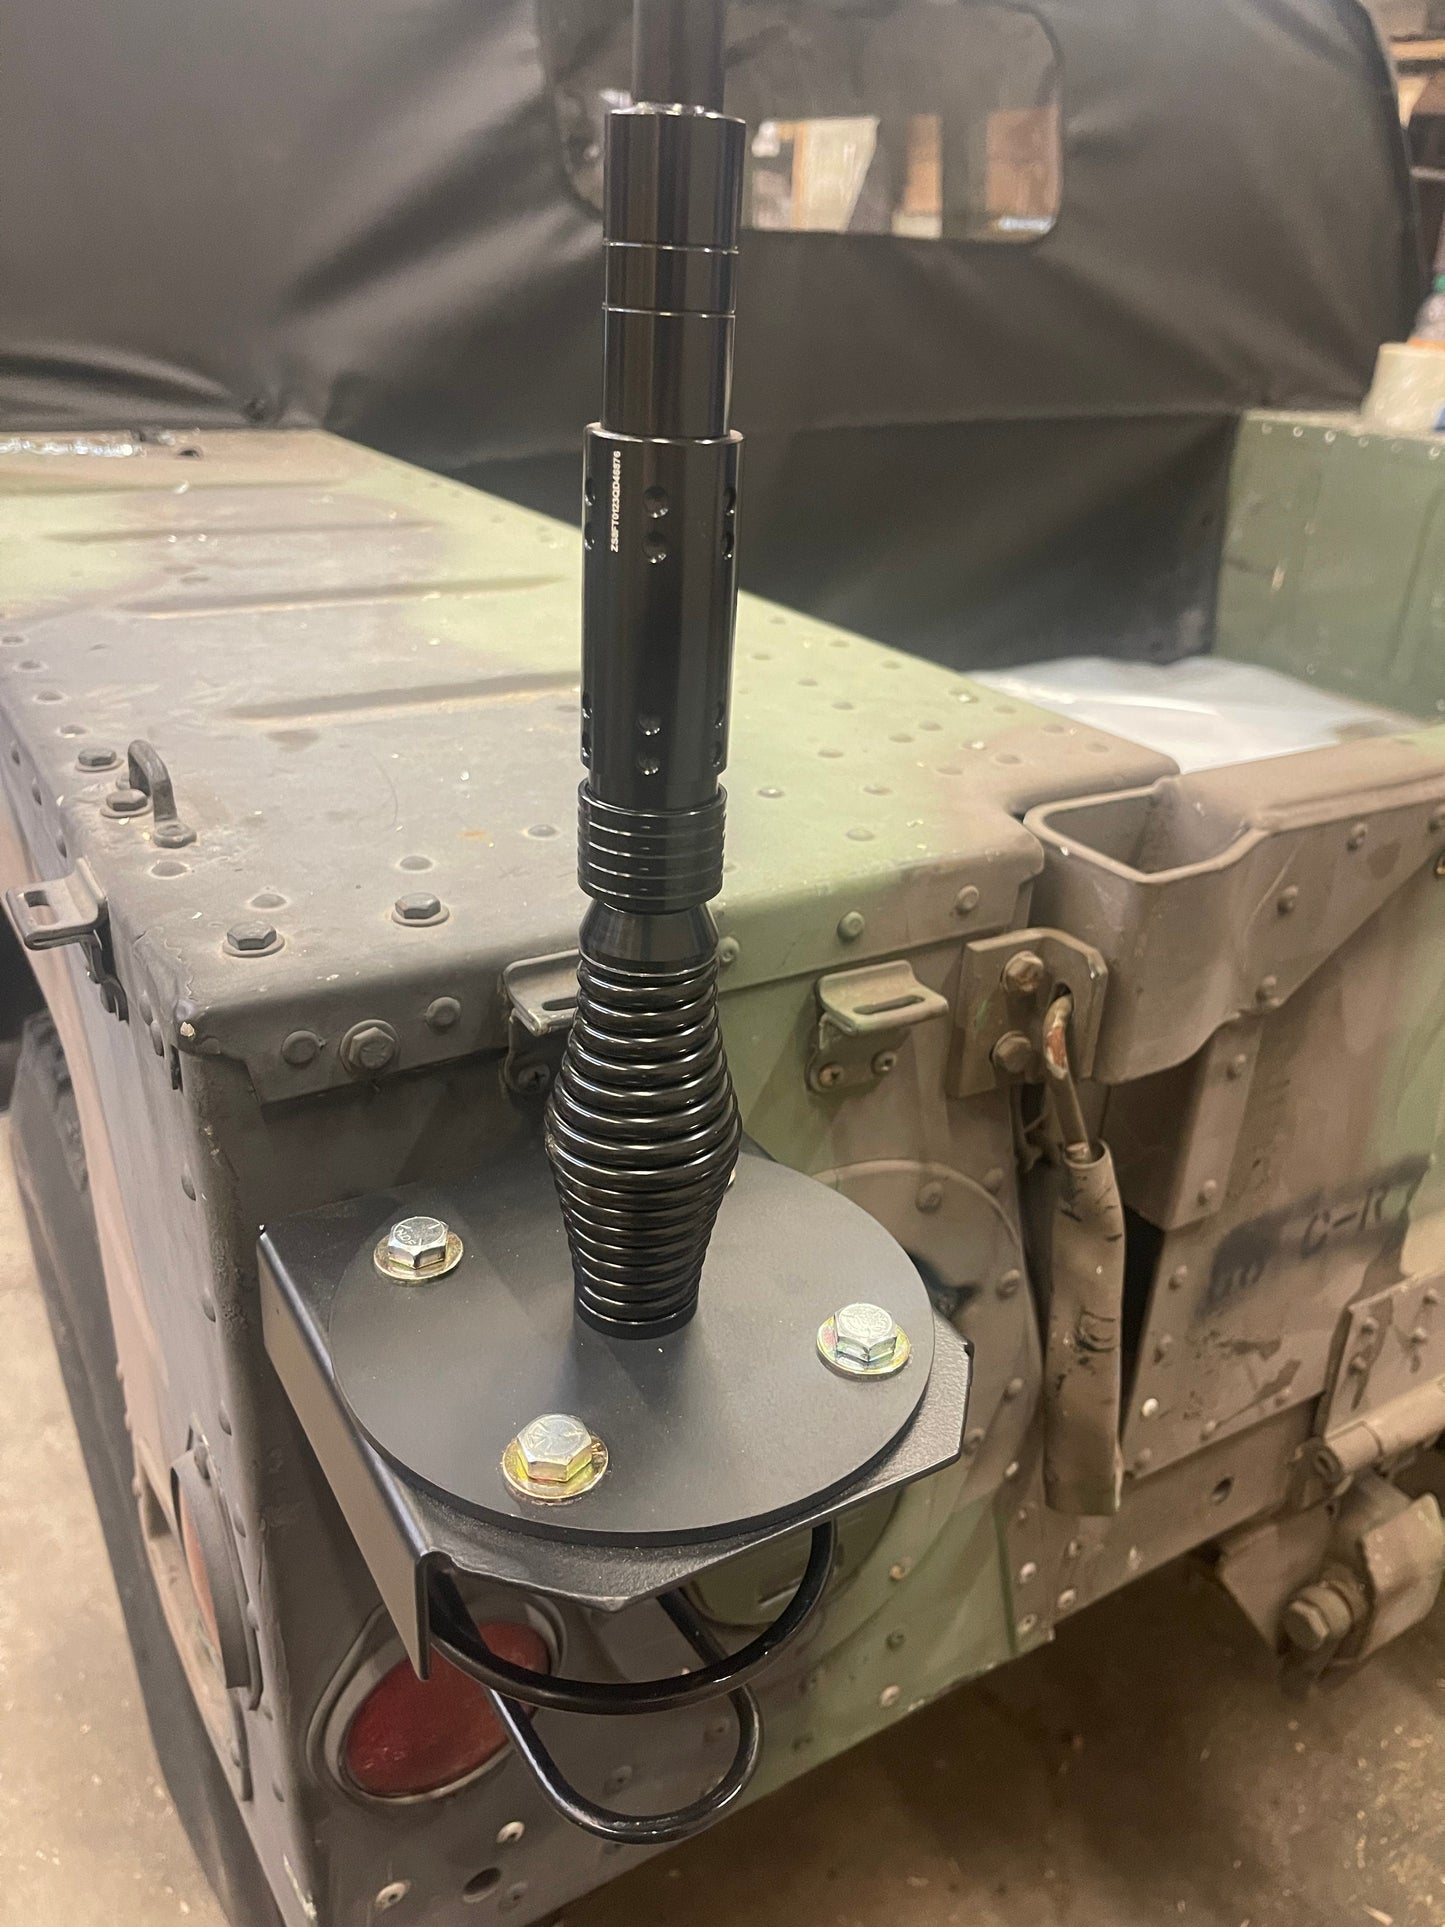 Dual Antenna Kit + Round Base Plates (No Bracket) Not OEM Fits Military vehicles including HUMVEE